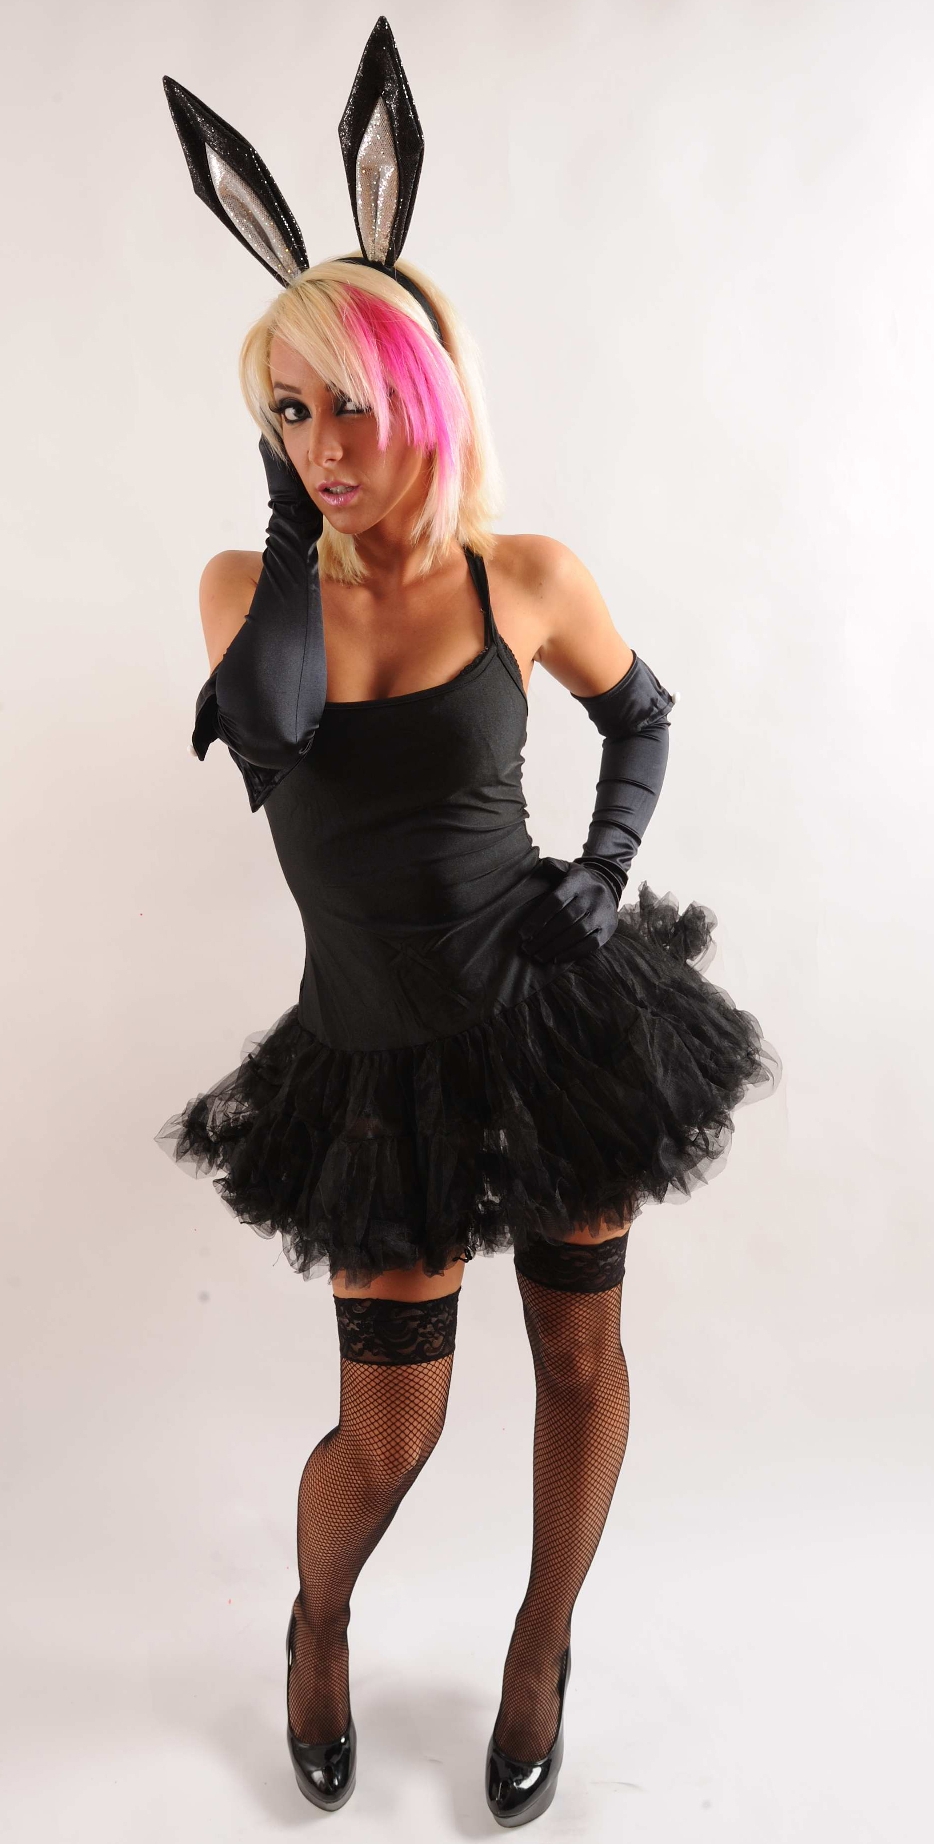 Blonde Bunny Girl wearing Black Stay-Up Fishnet Stockings, Satin Gloves and Black Short Dress